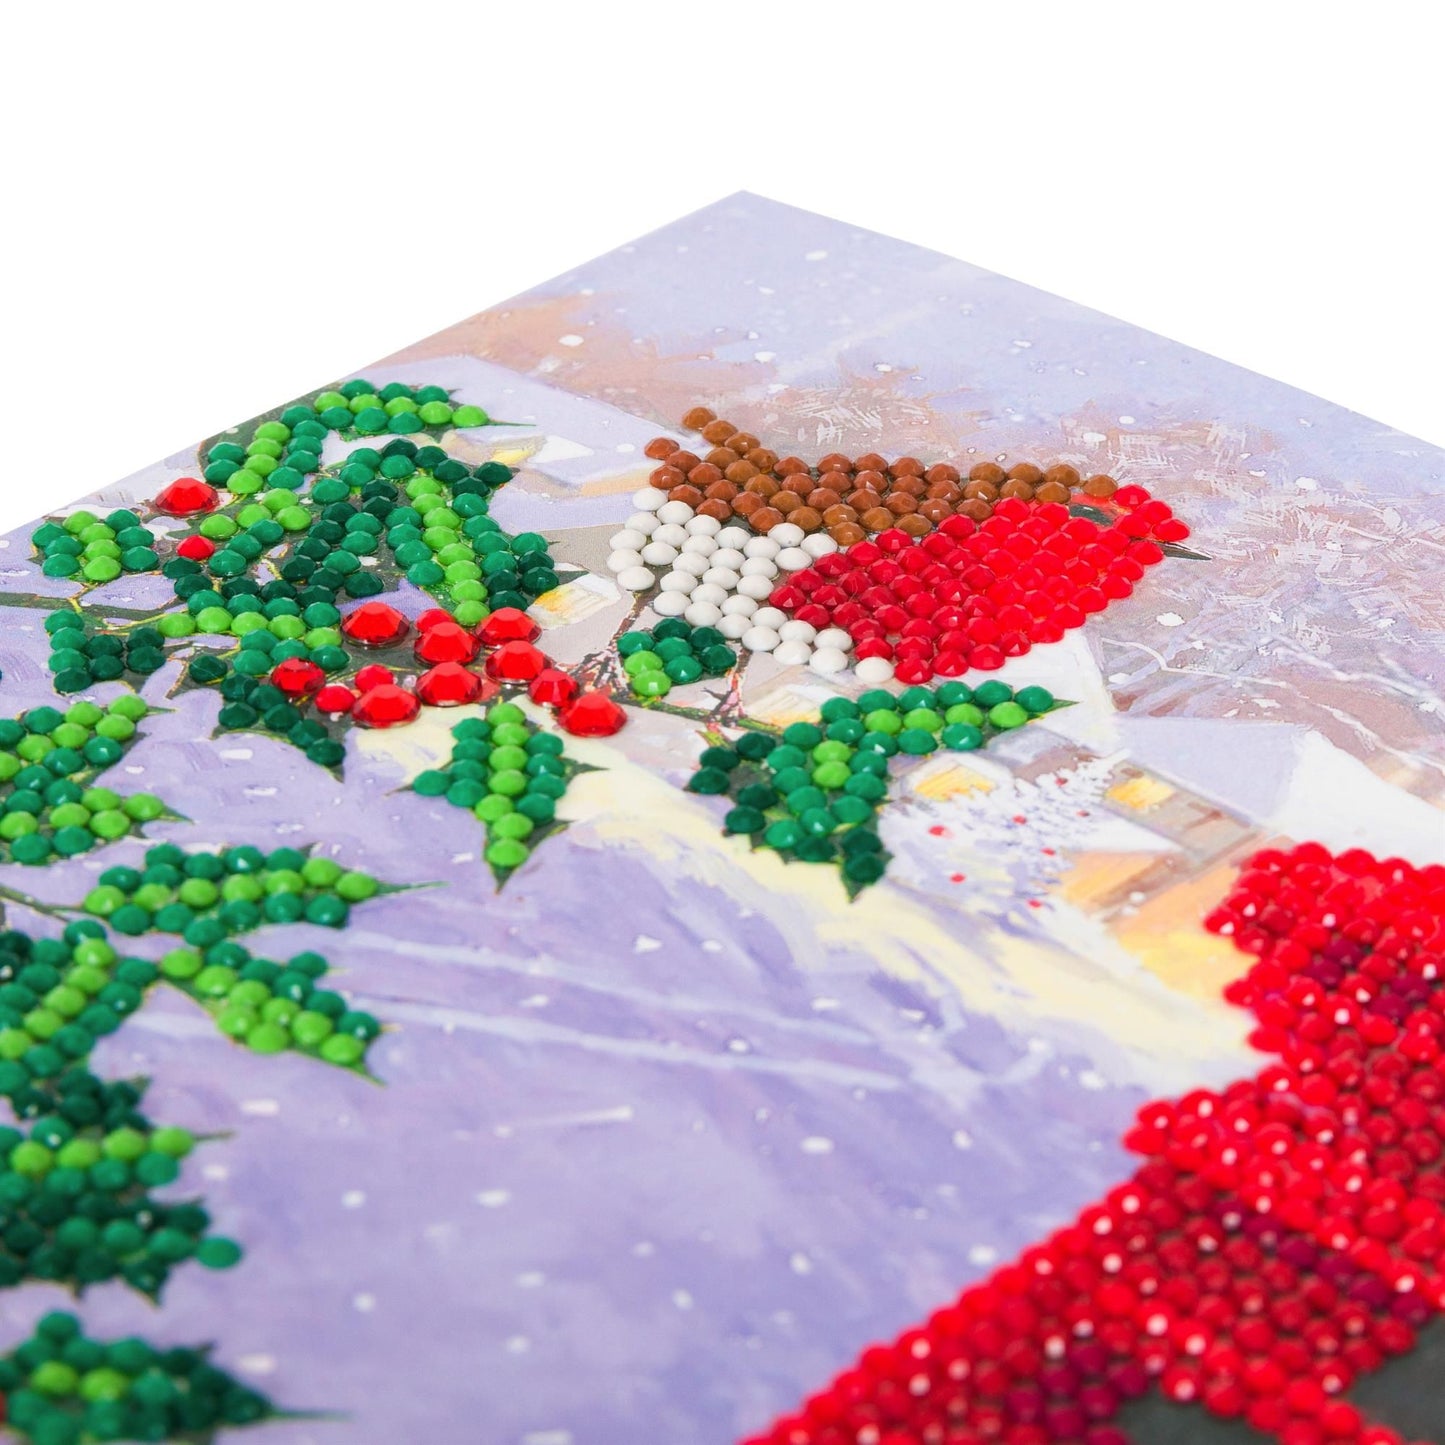 Craft Buddy 18x18cm DIY Crystal Christmas Card Kit ~ 2020 Designs